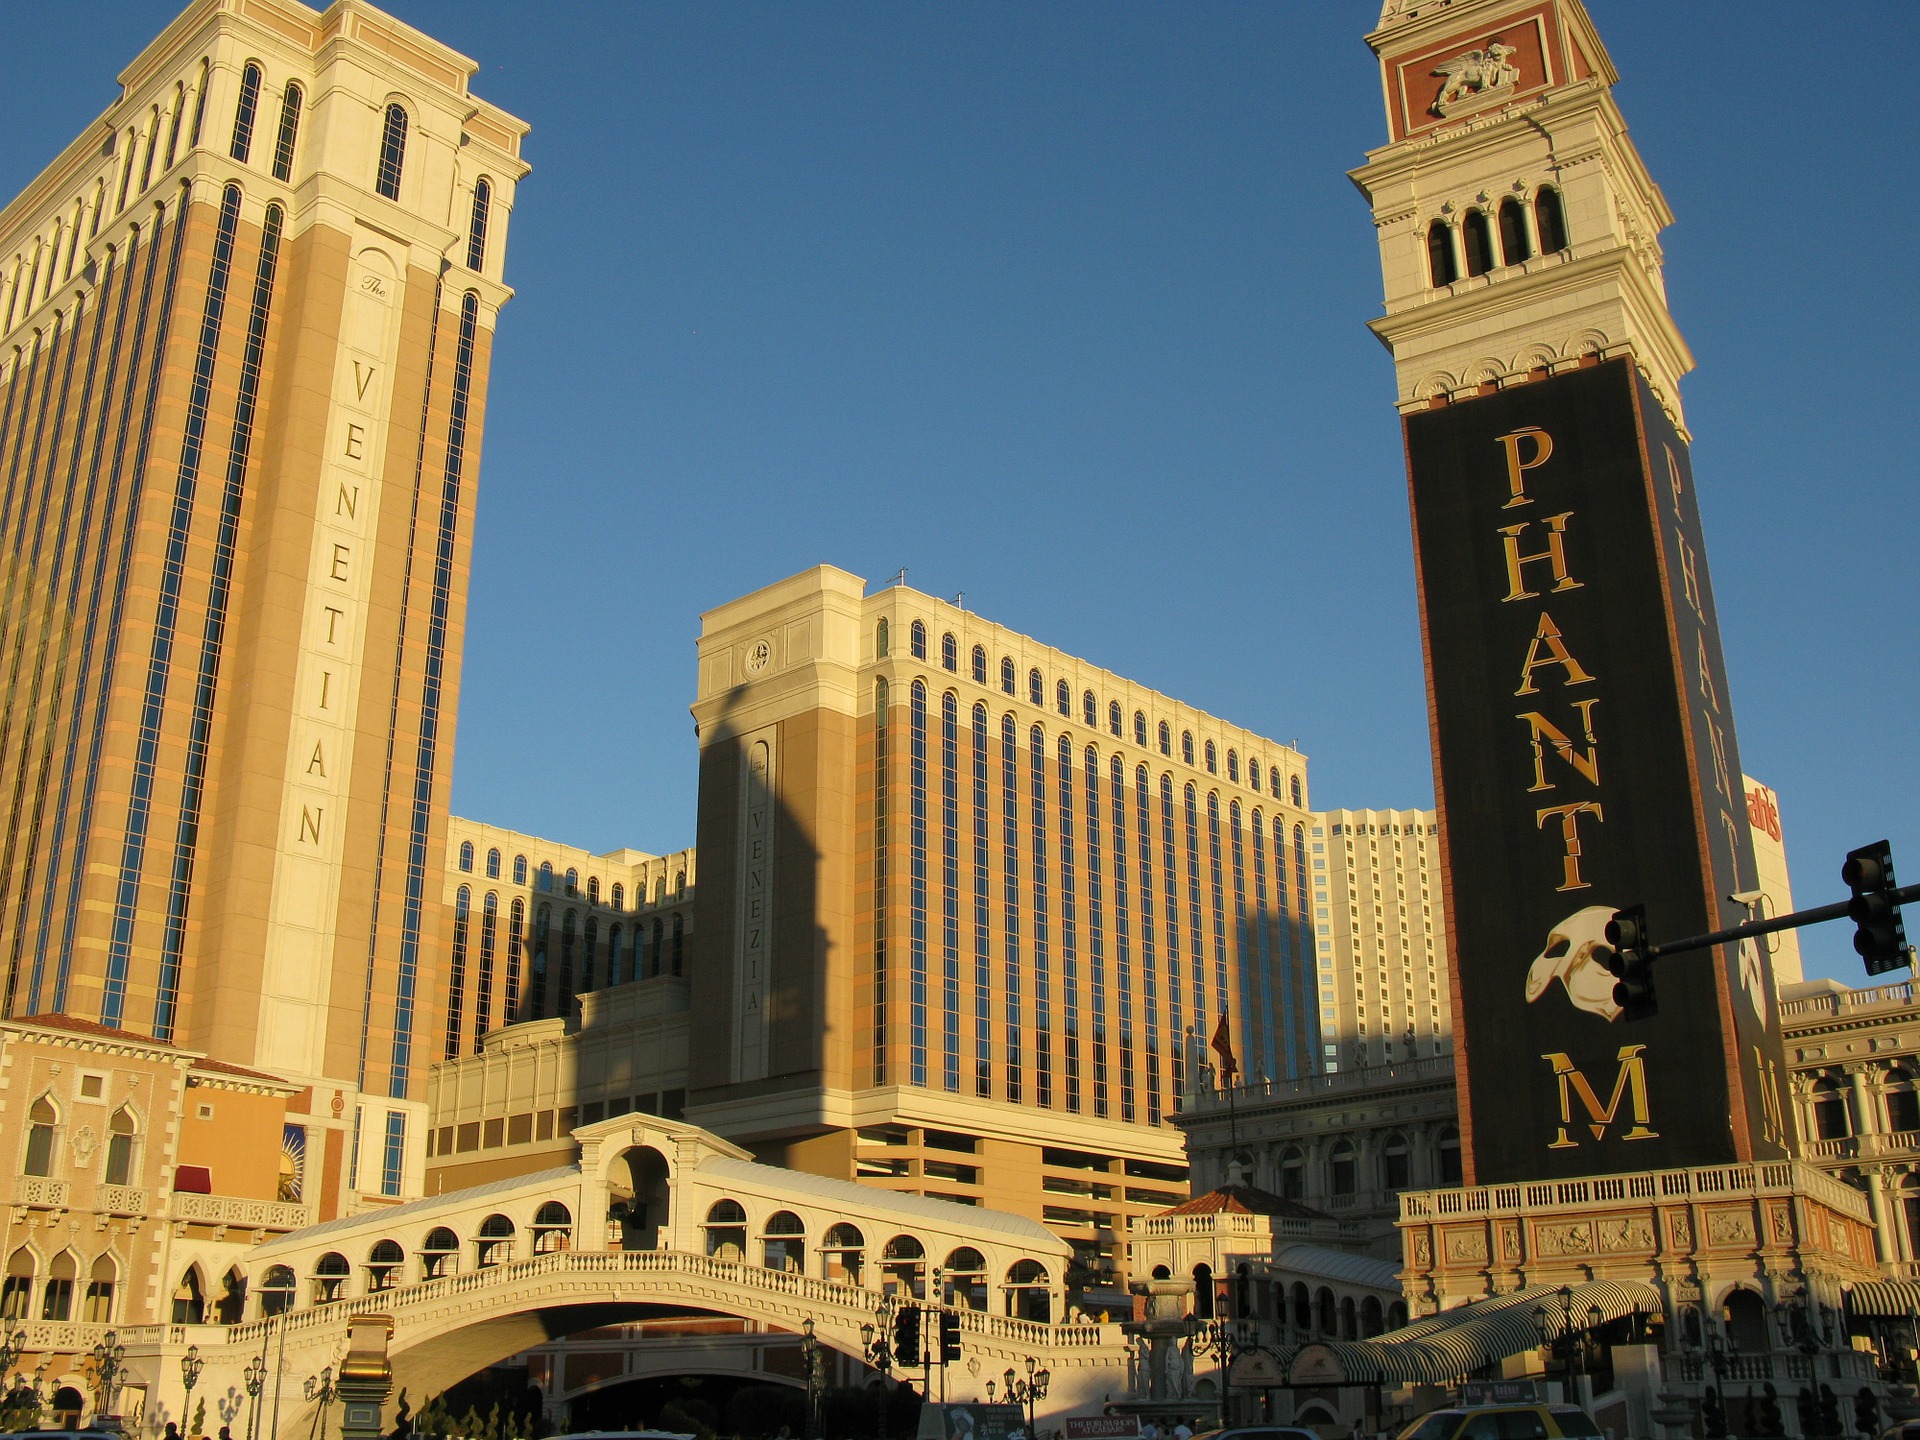 Las Vegas Sands explores online gambling opportunities, EGR North America